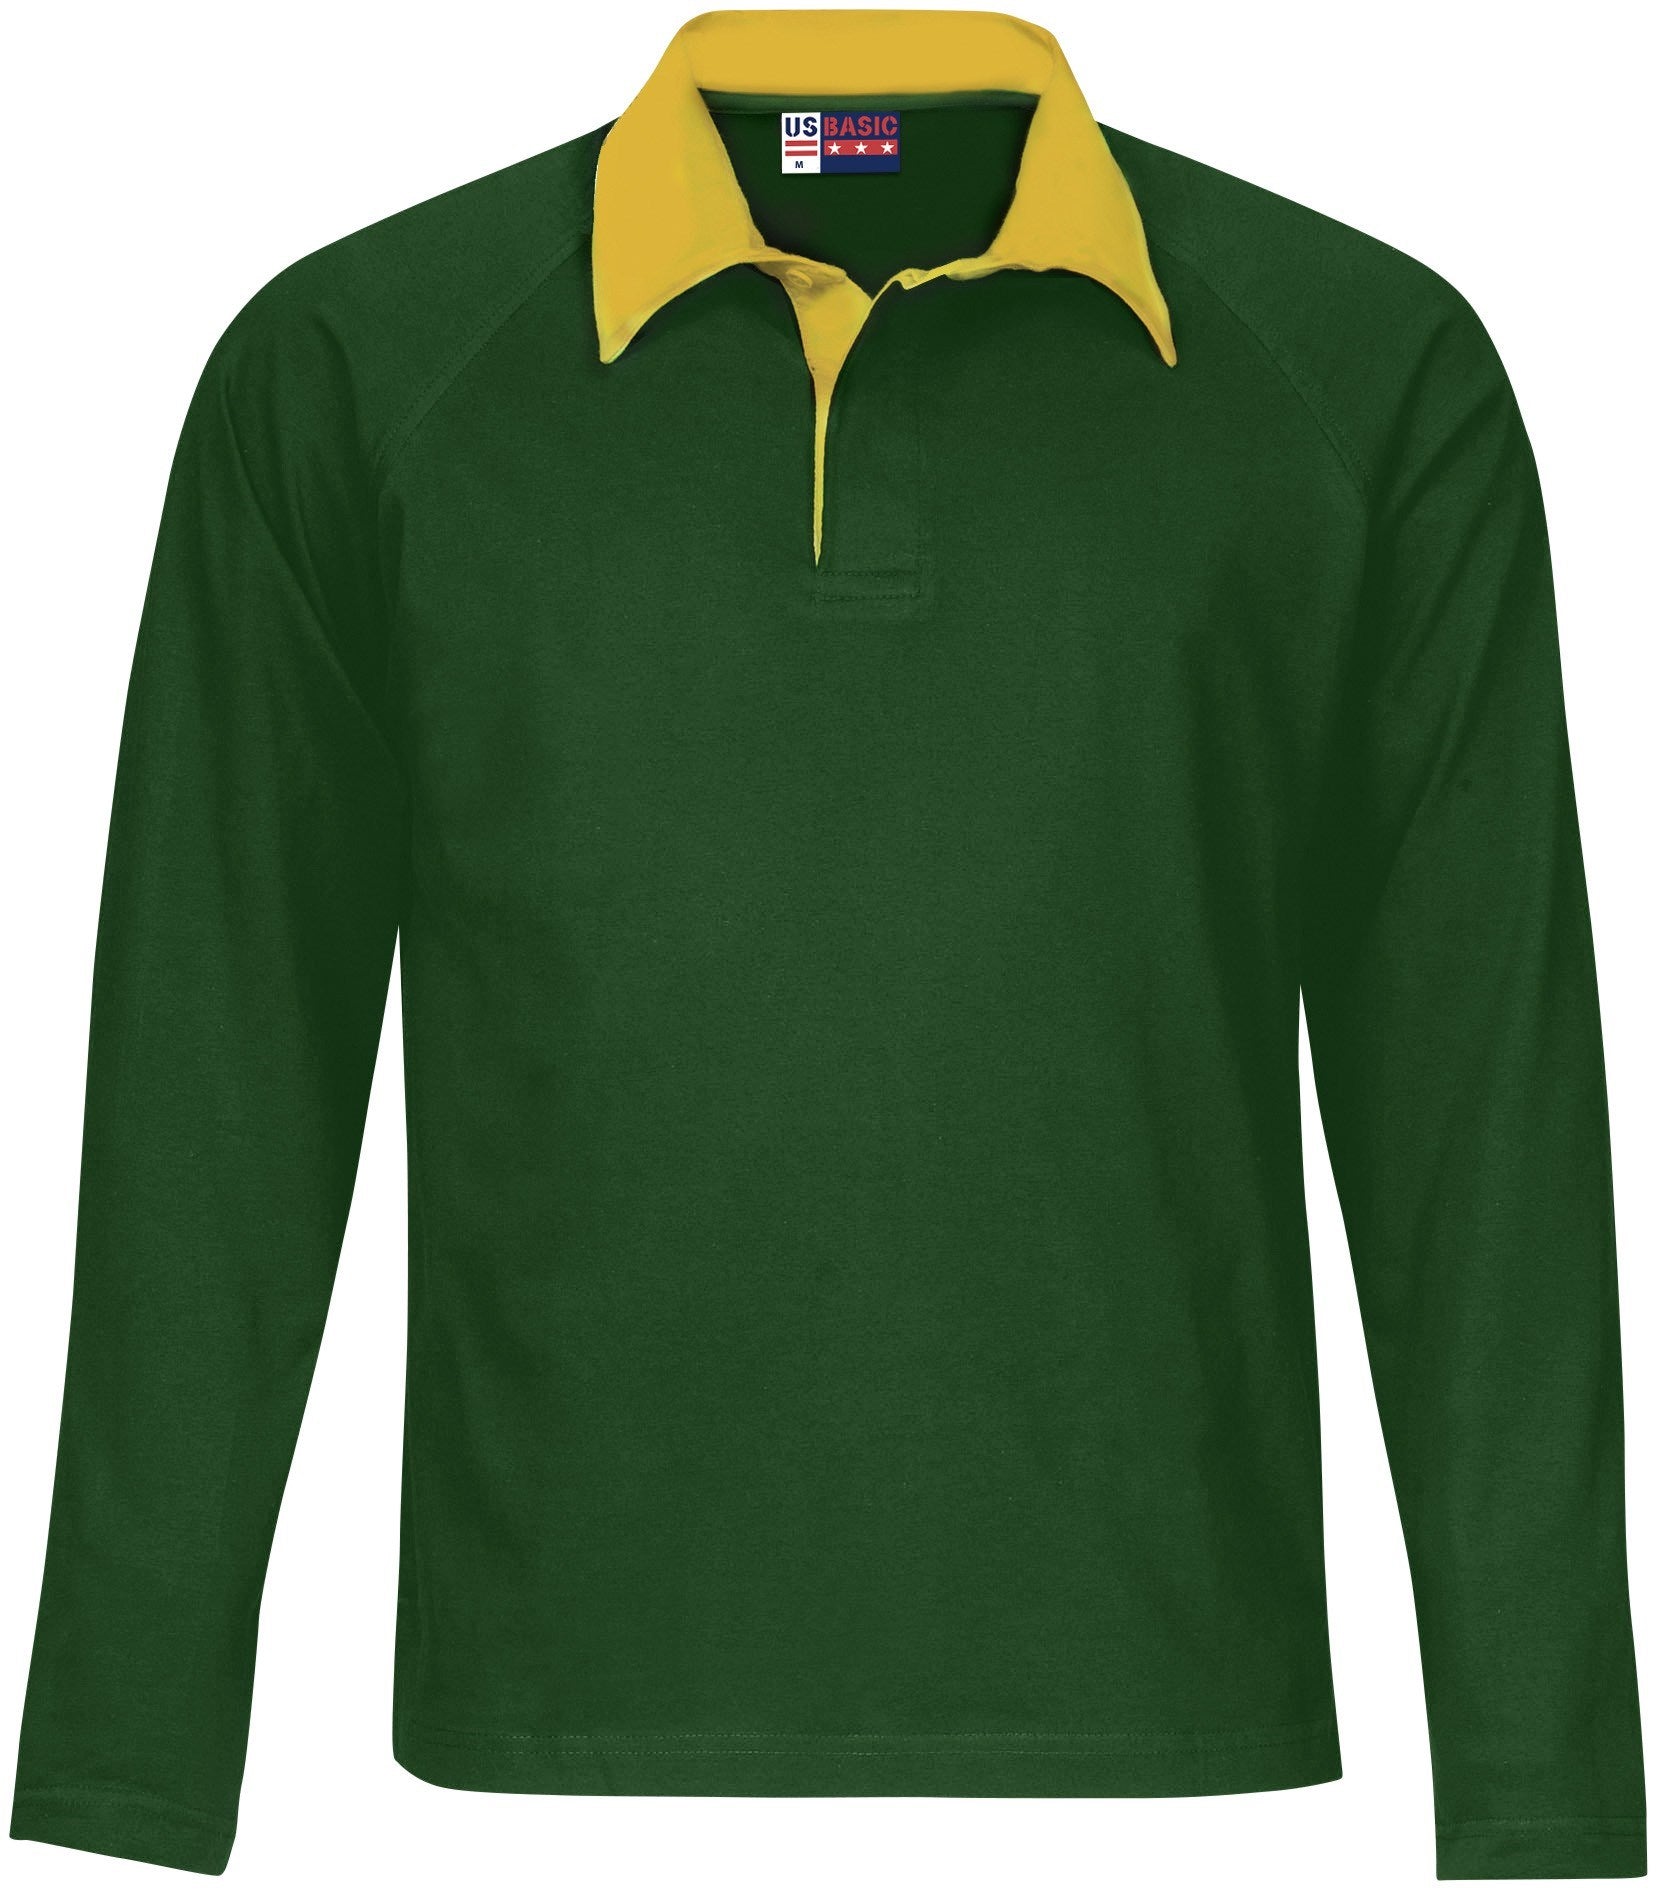 Mens Long Sleeve Brisbane Golf Shirt - Red L / Green and Gold / GG